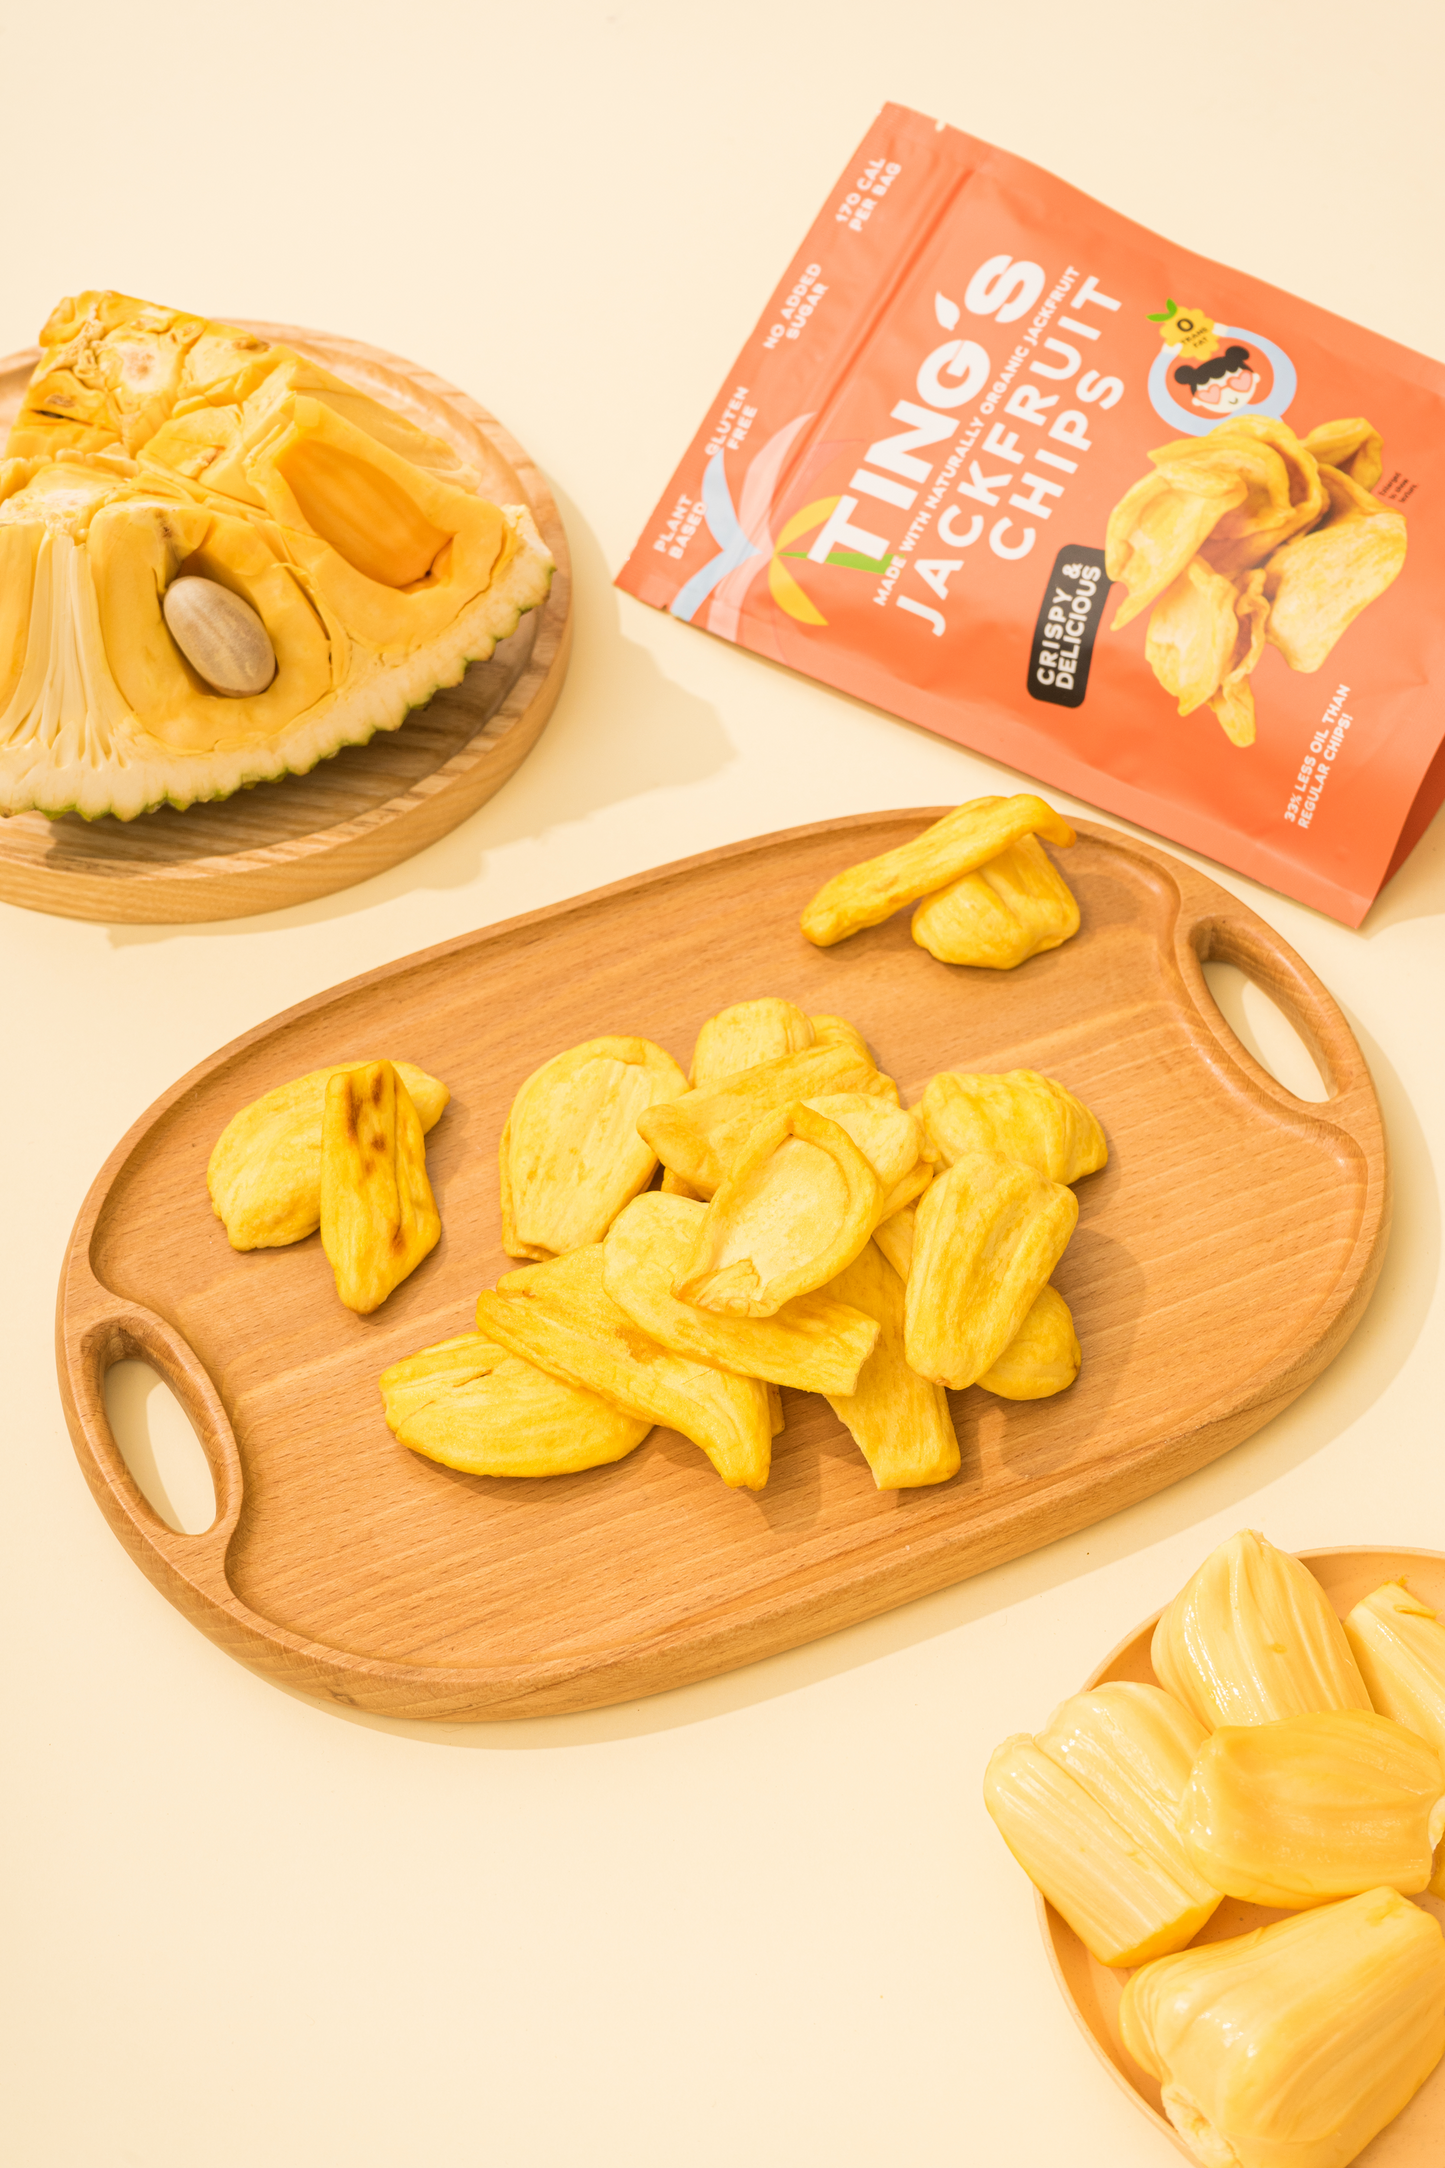 Ting's Jackfruit Chips | Original Flavor (12-Pack)